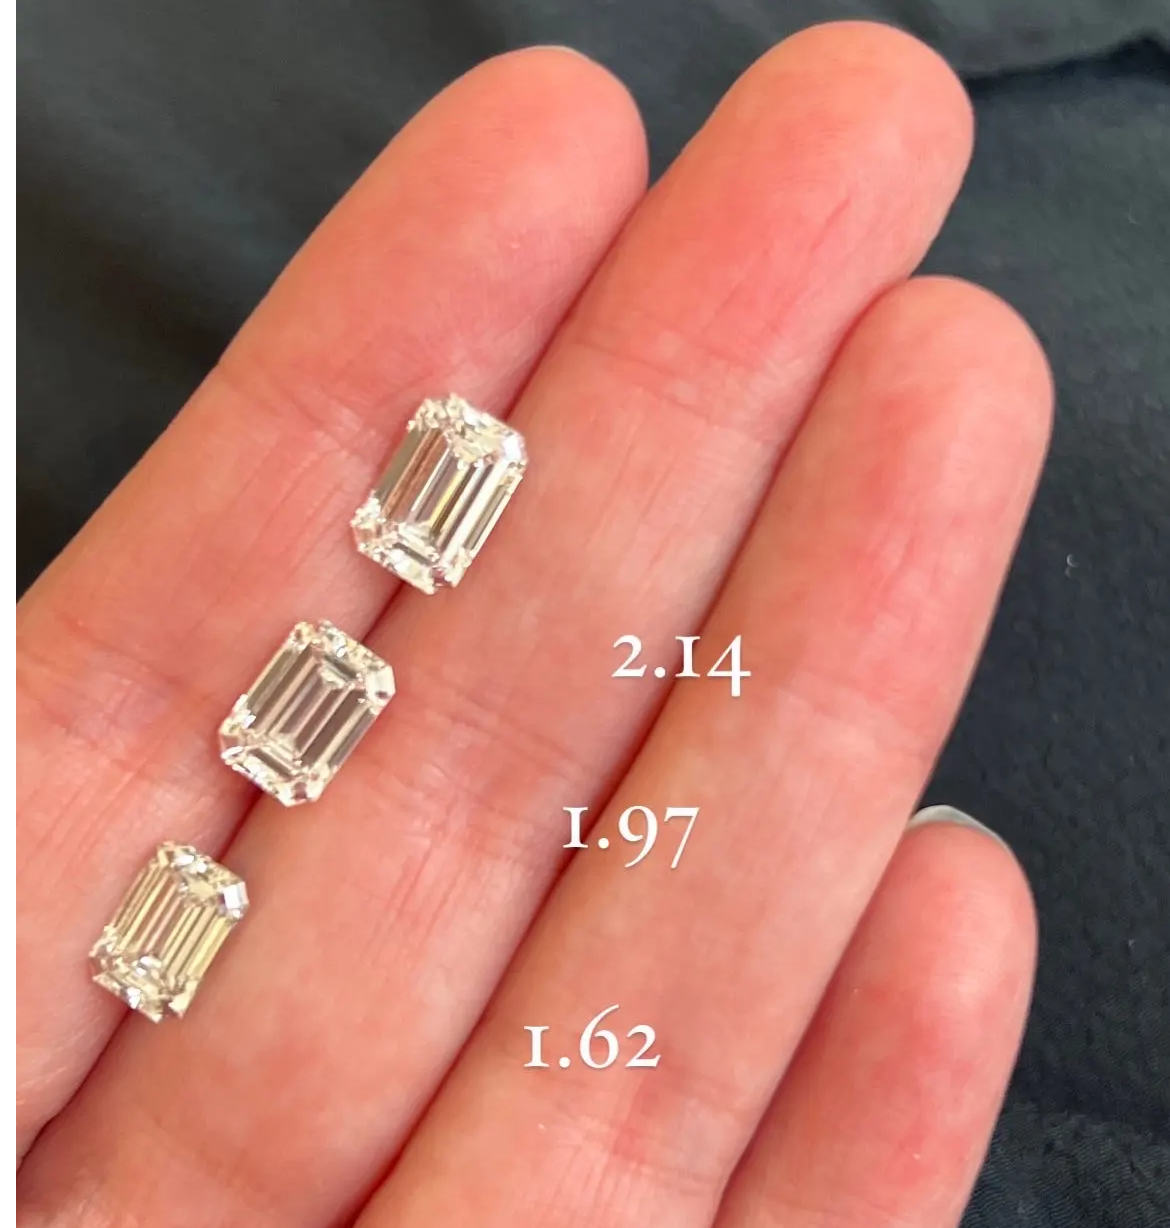 emerald cut diamond carat sizes on a hand